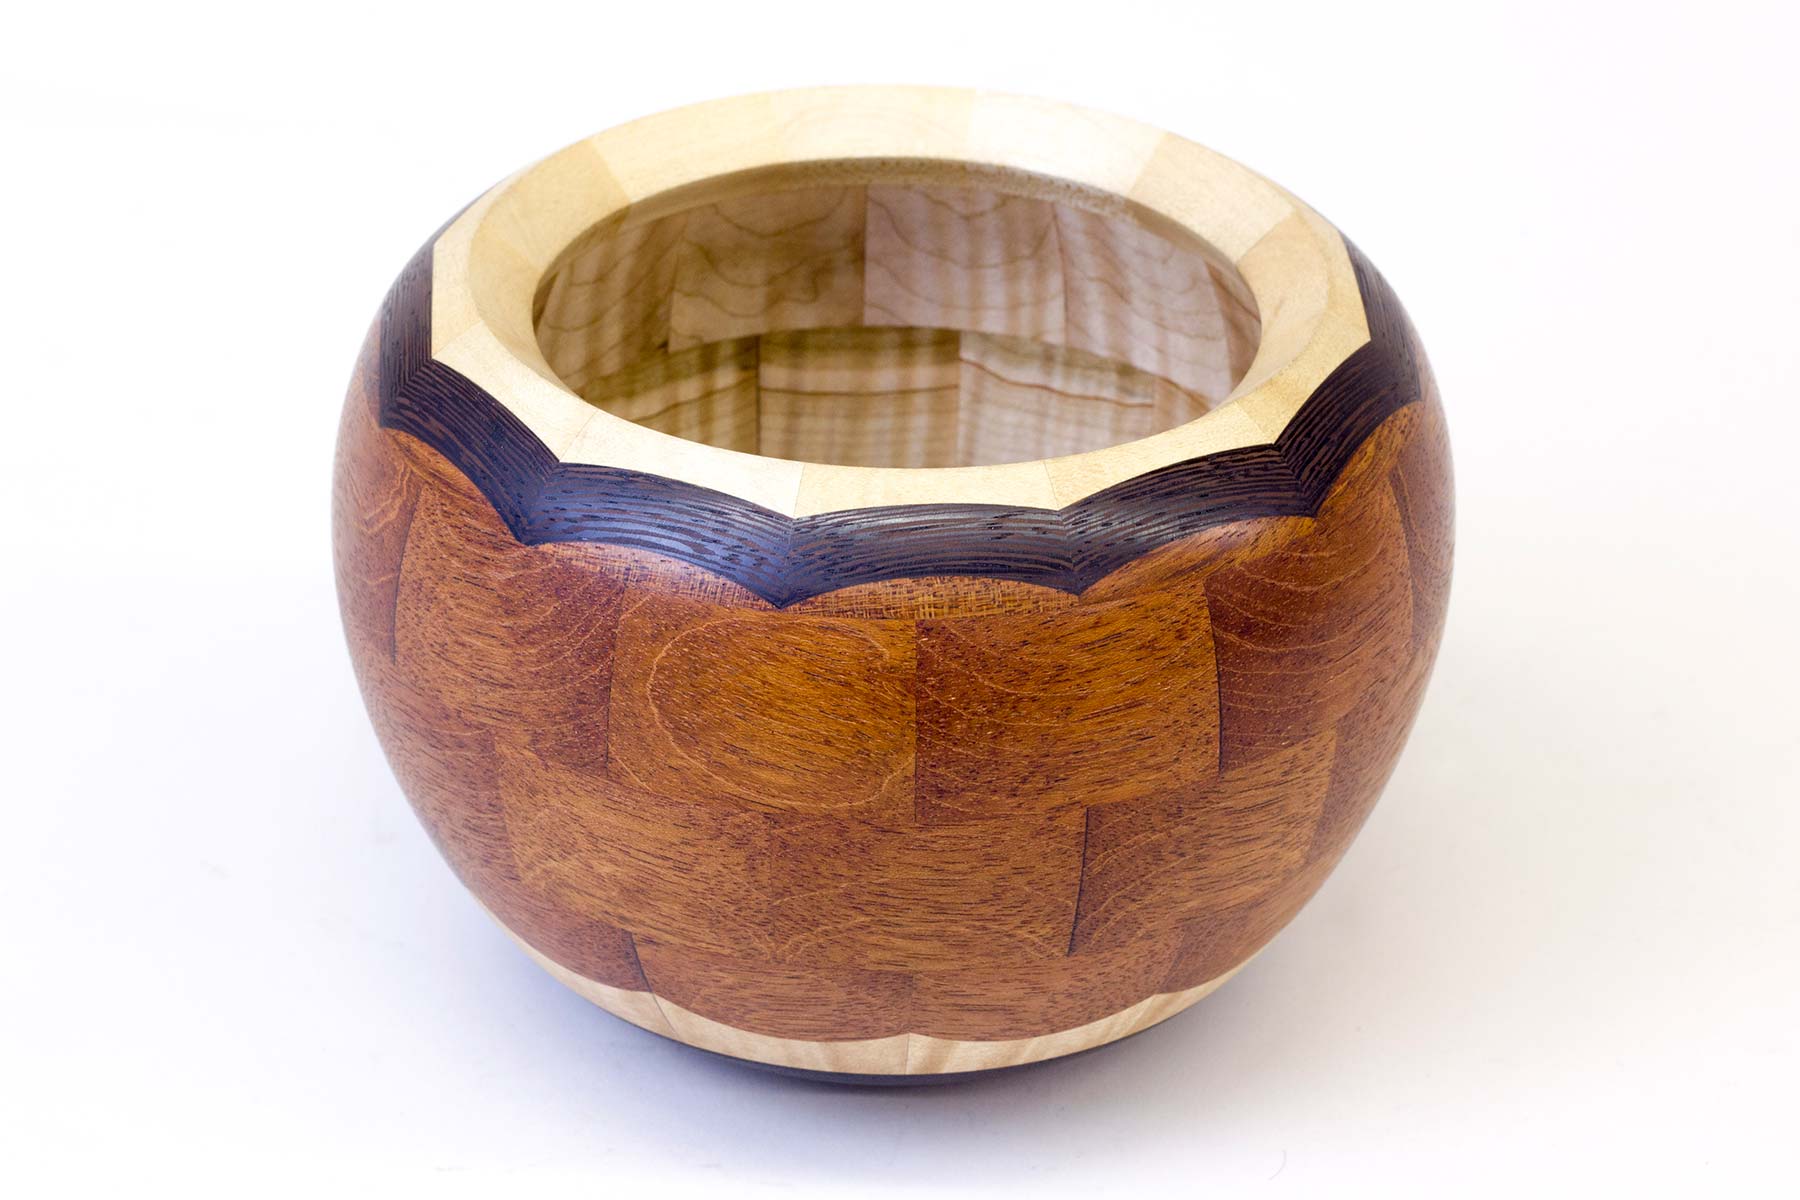 Lathe wood segmented bowl